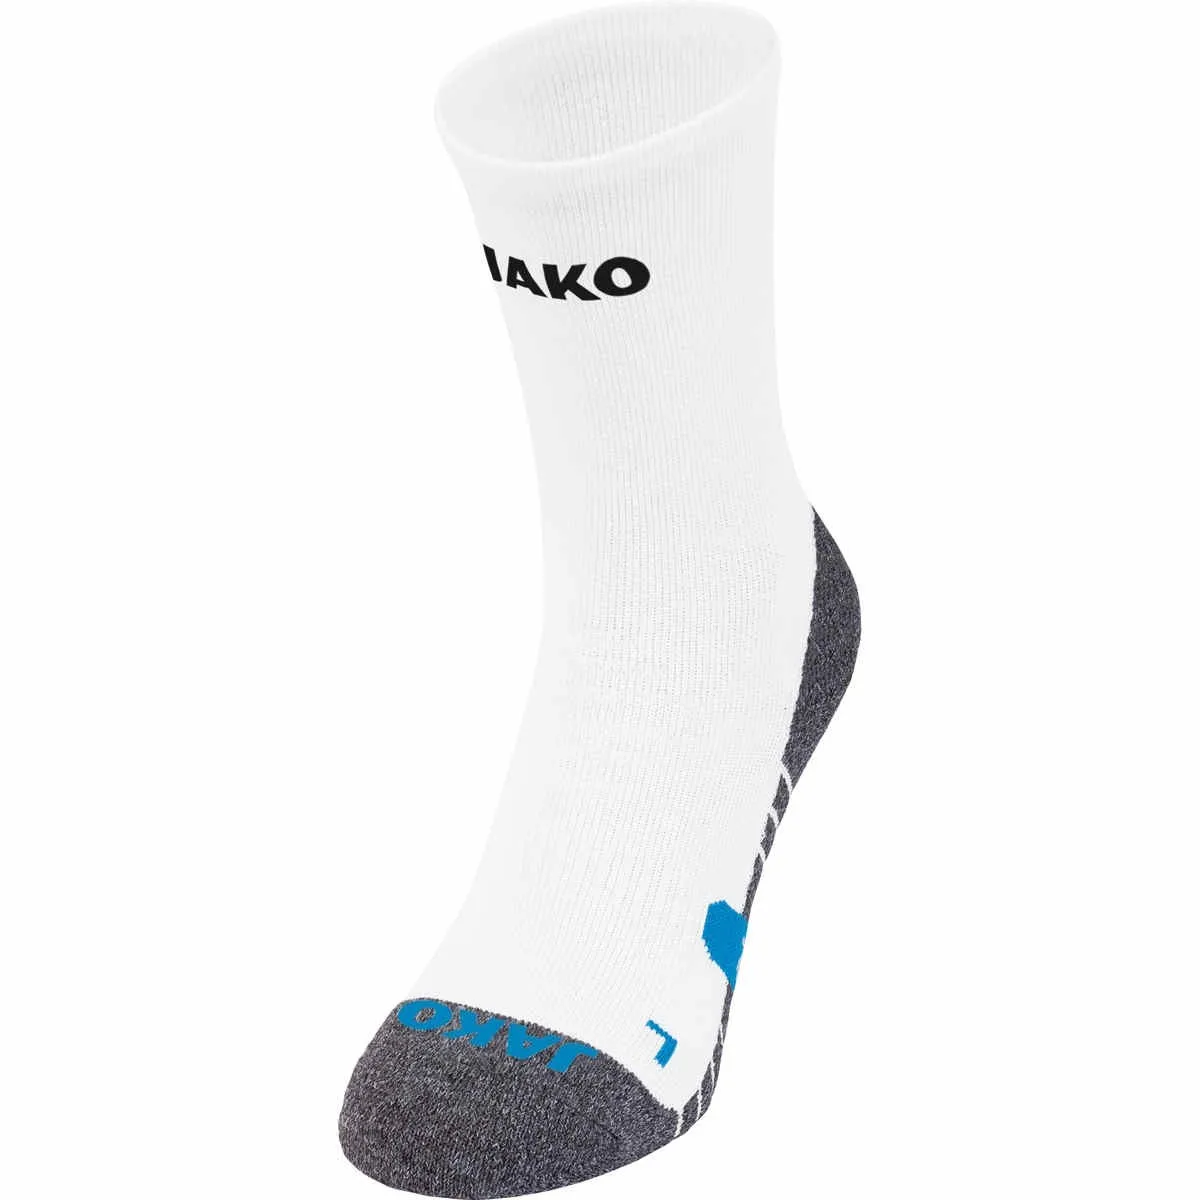 Jako training socks Profi white size 43-46